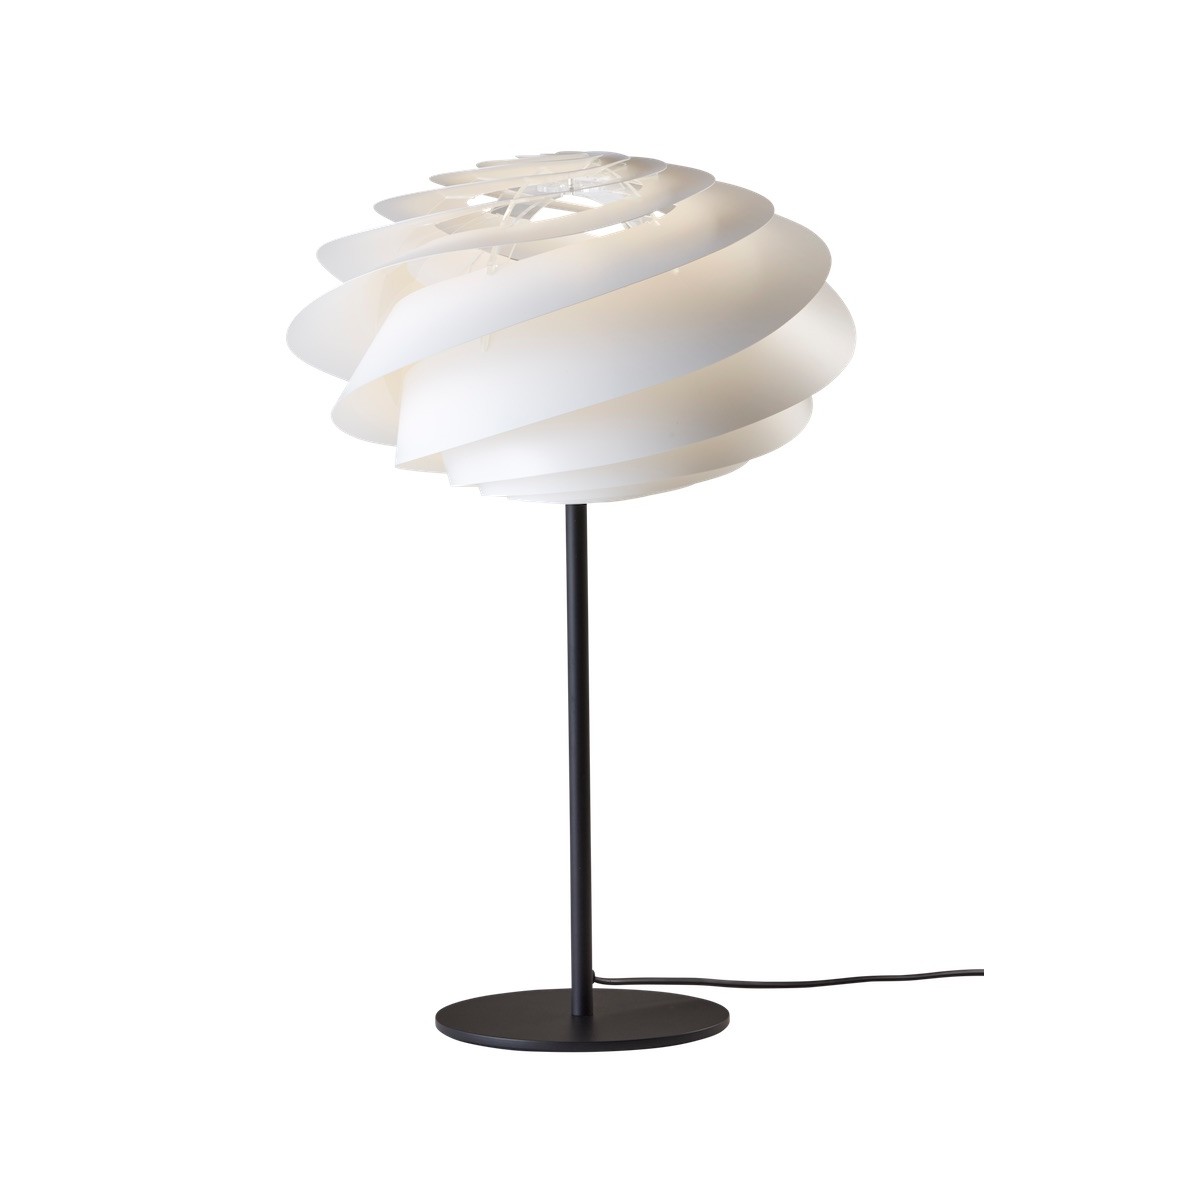 Swirl table lamp